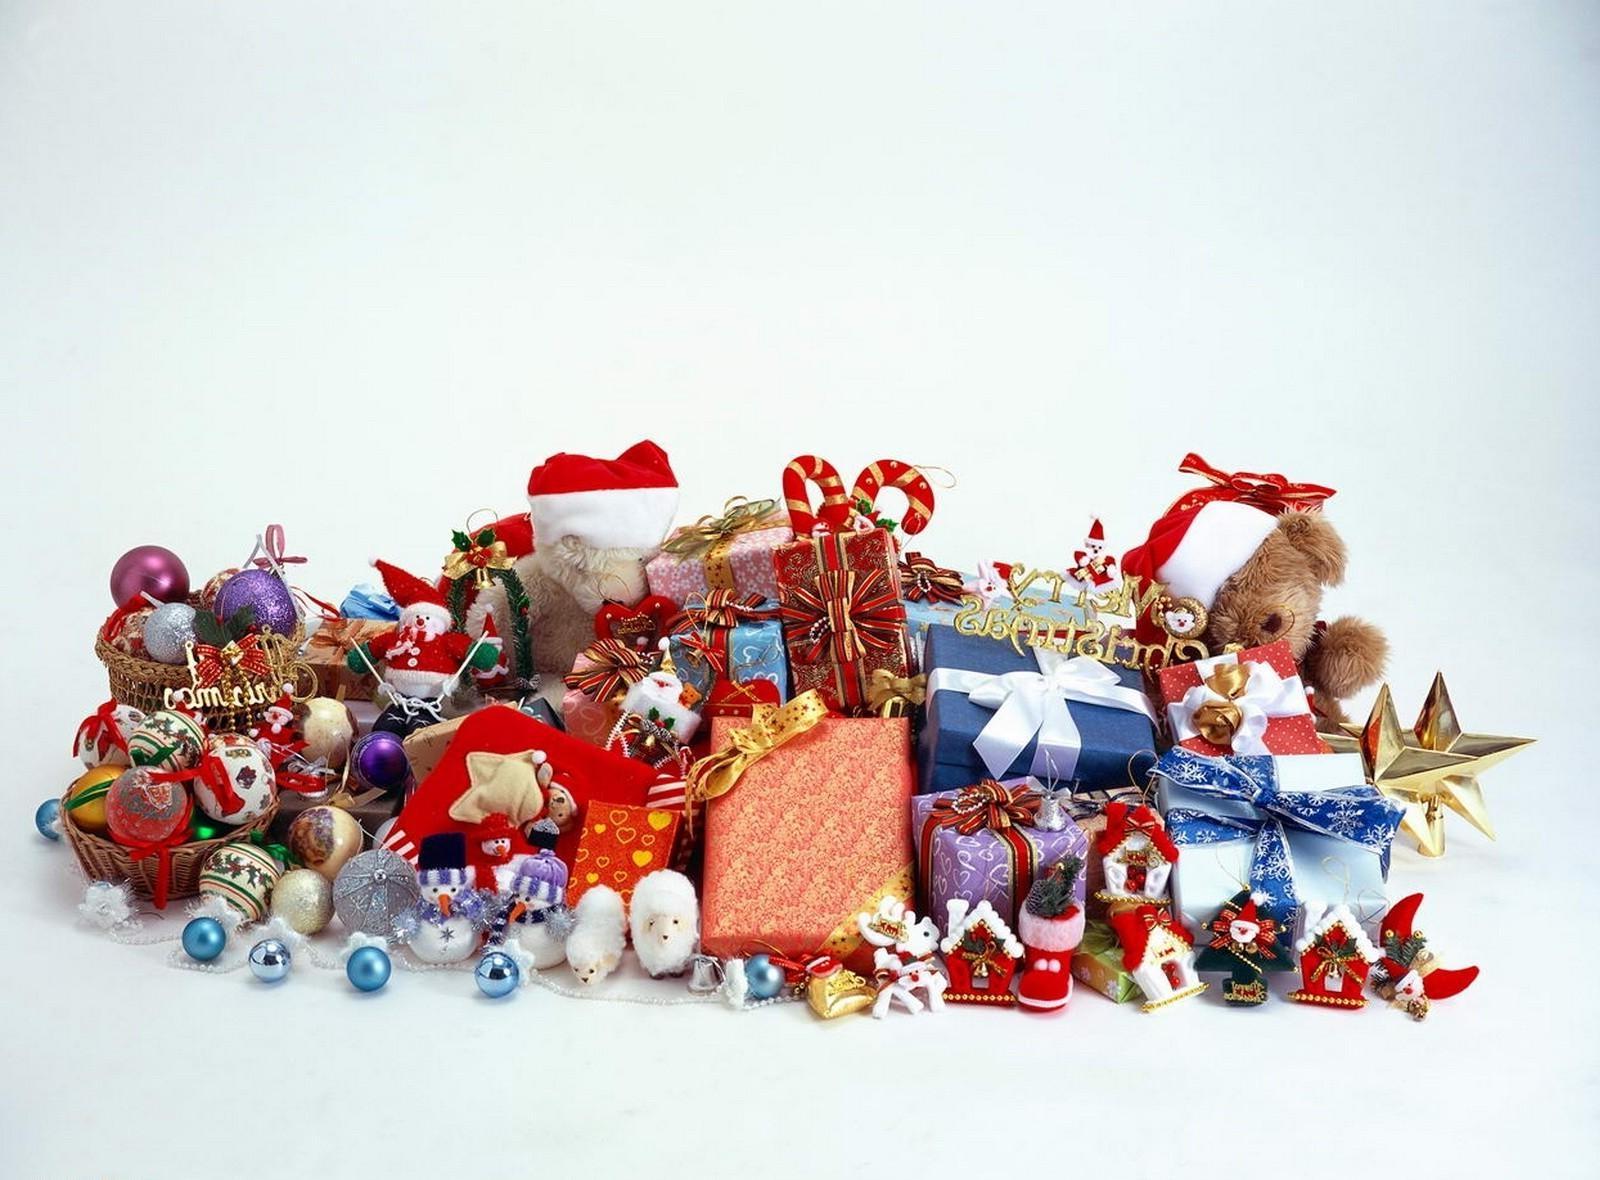 50+] Christmas Toys Wallpapers - WallpaperSafari